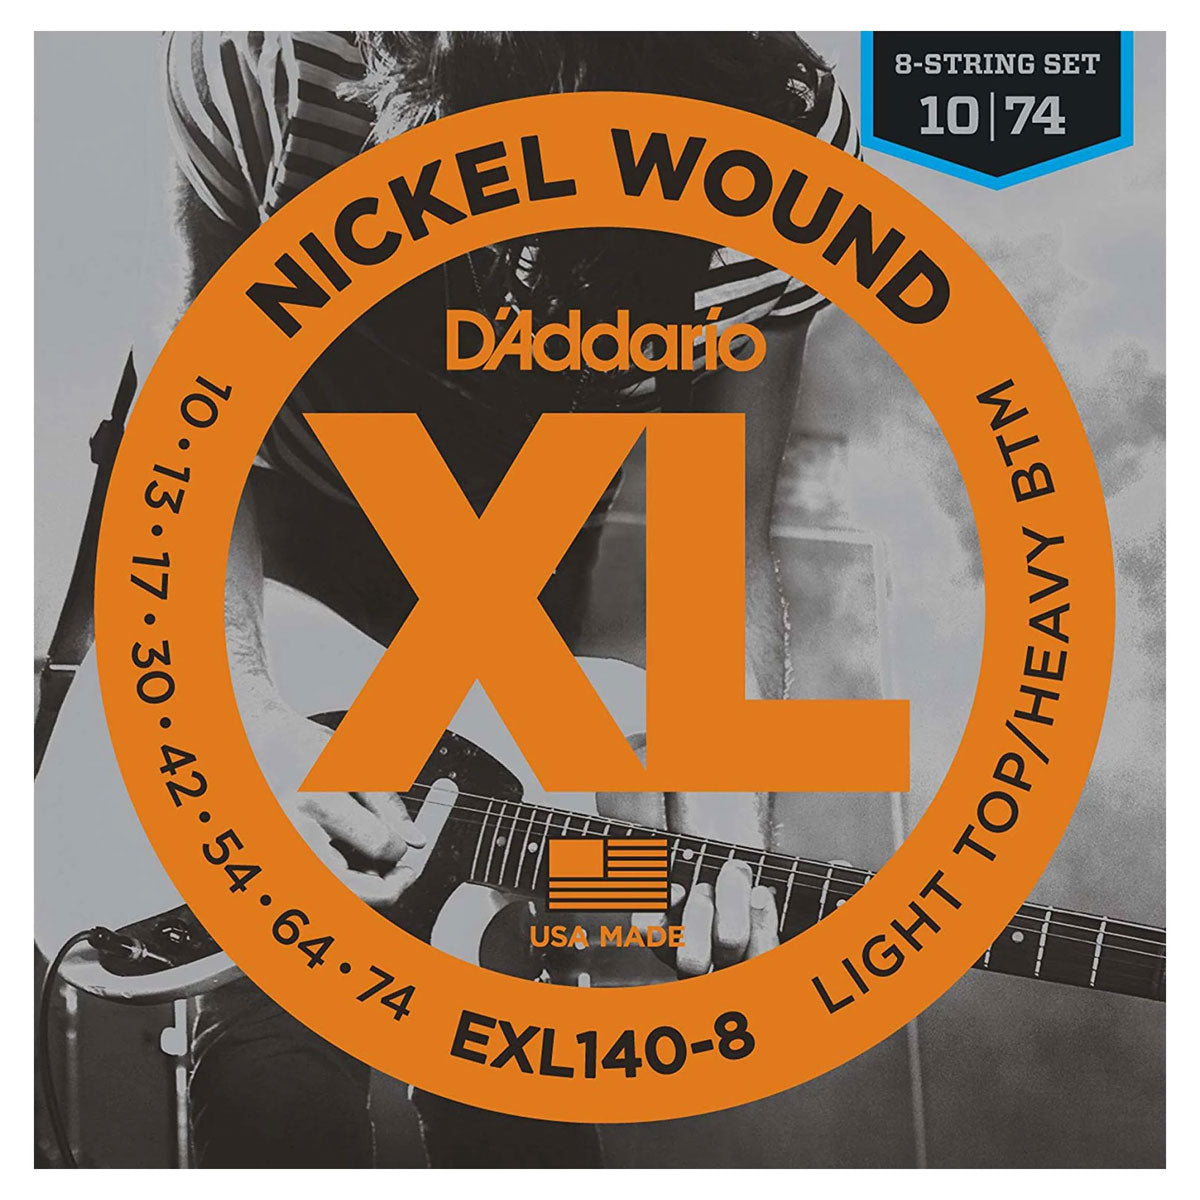 D'Addario EXL1408 Nickel Round Wound Light Top Heavy Bottom 8-String Electric Guitar Strings 010-074